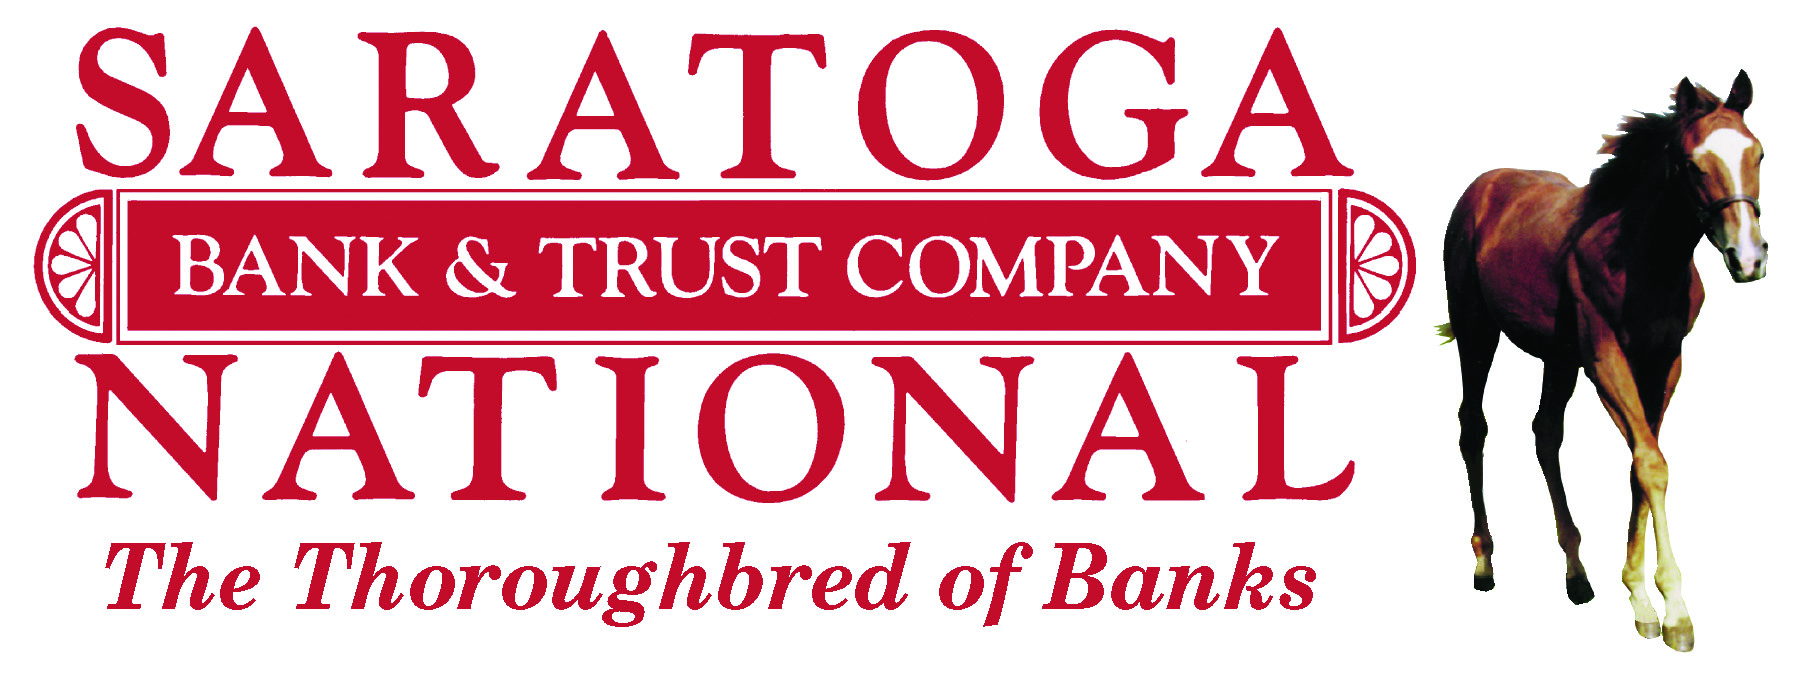 saratoga bank & trust